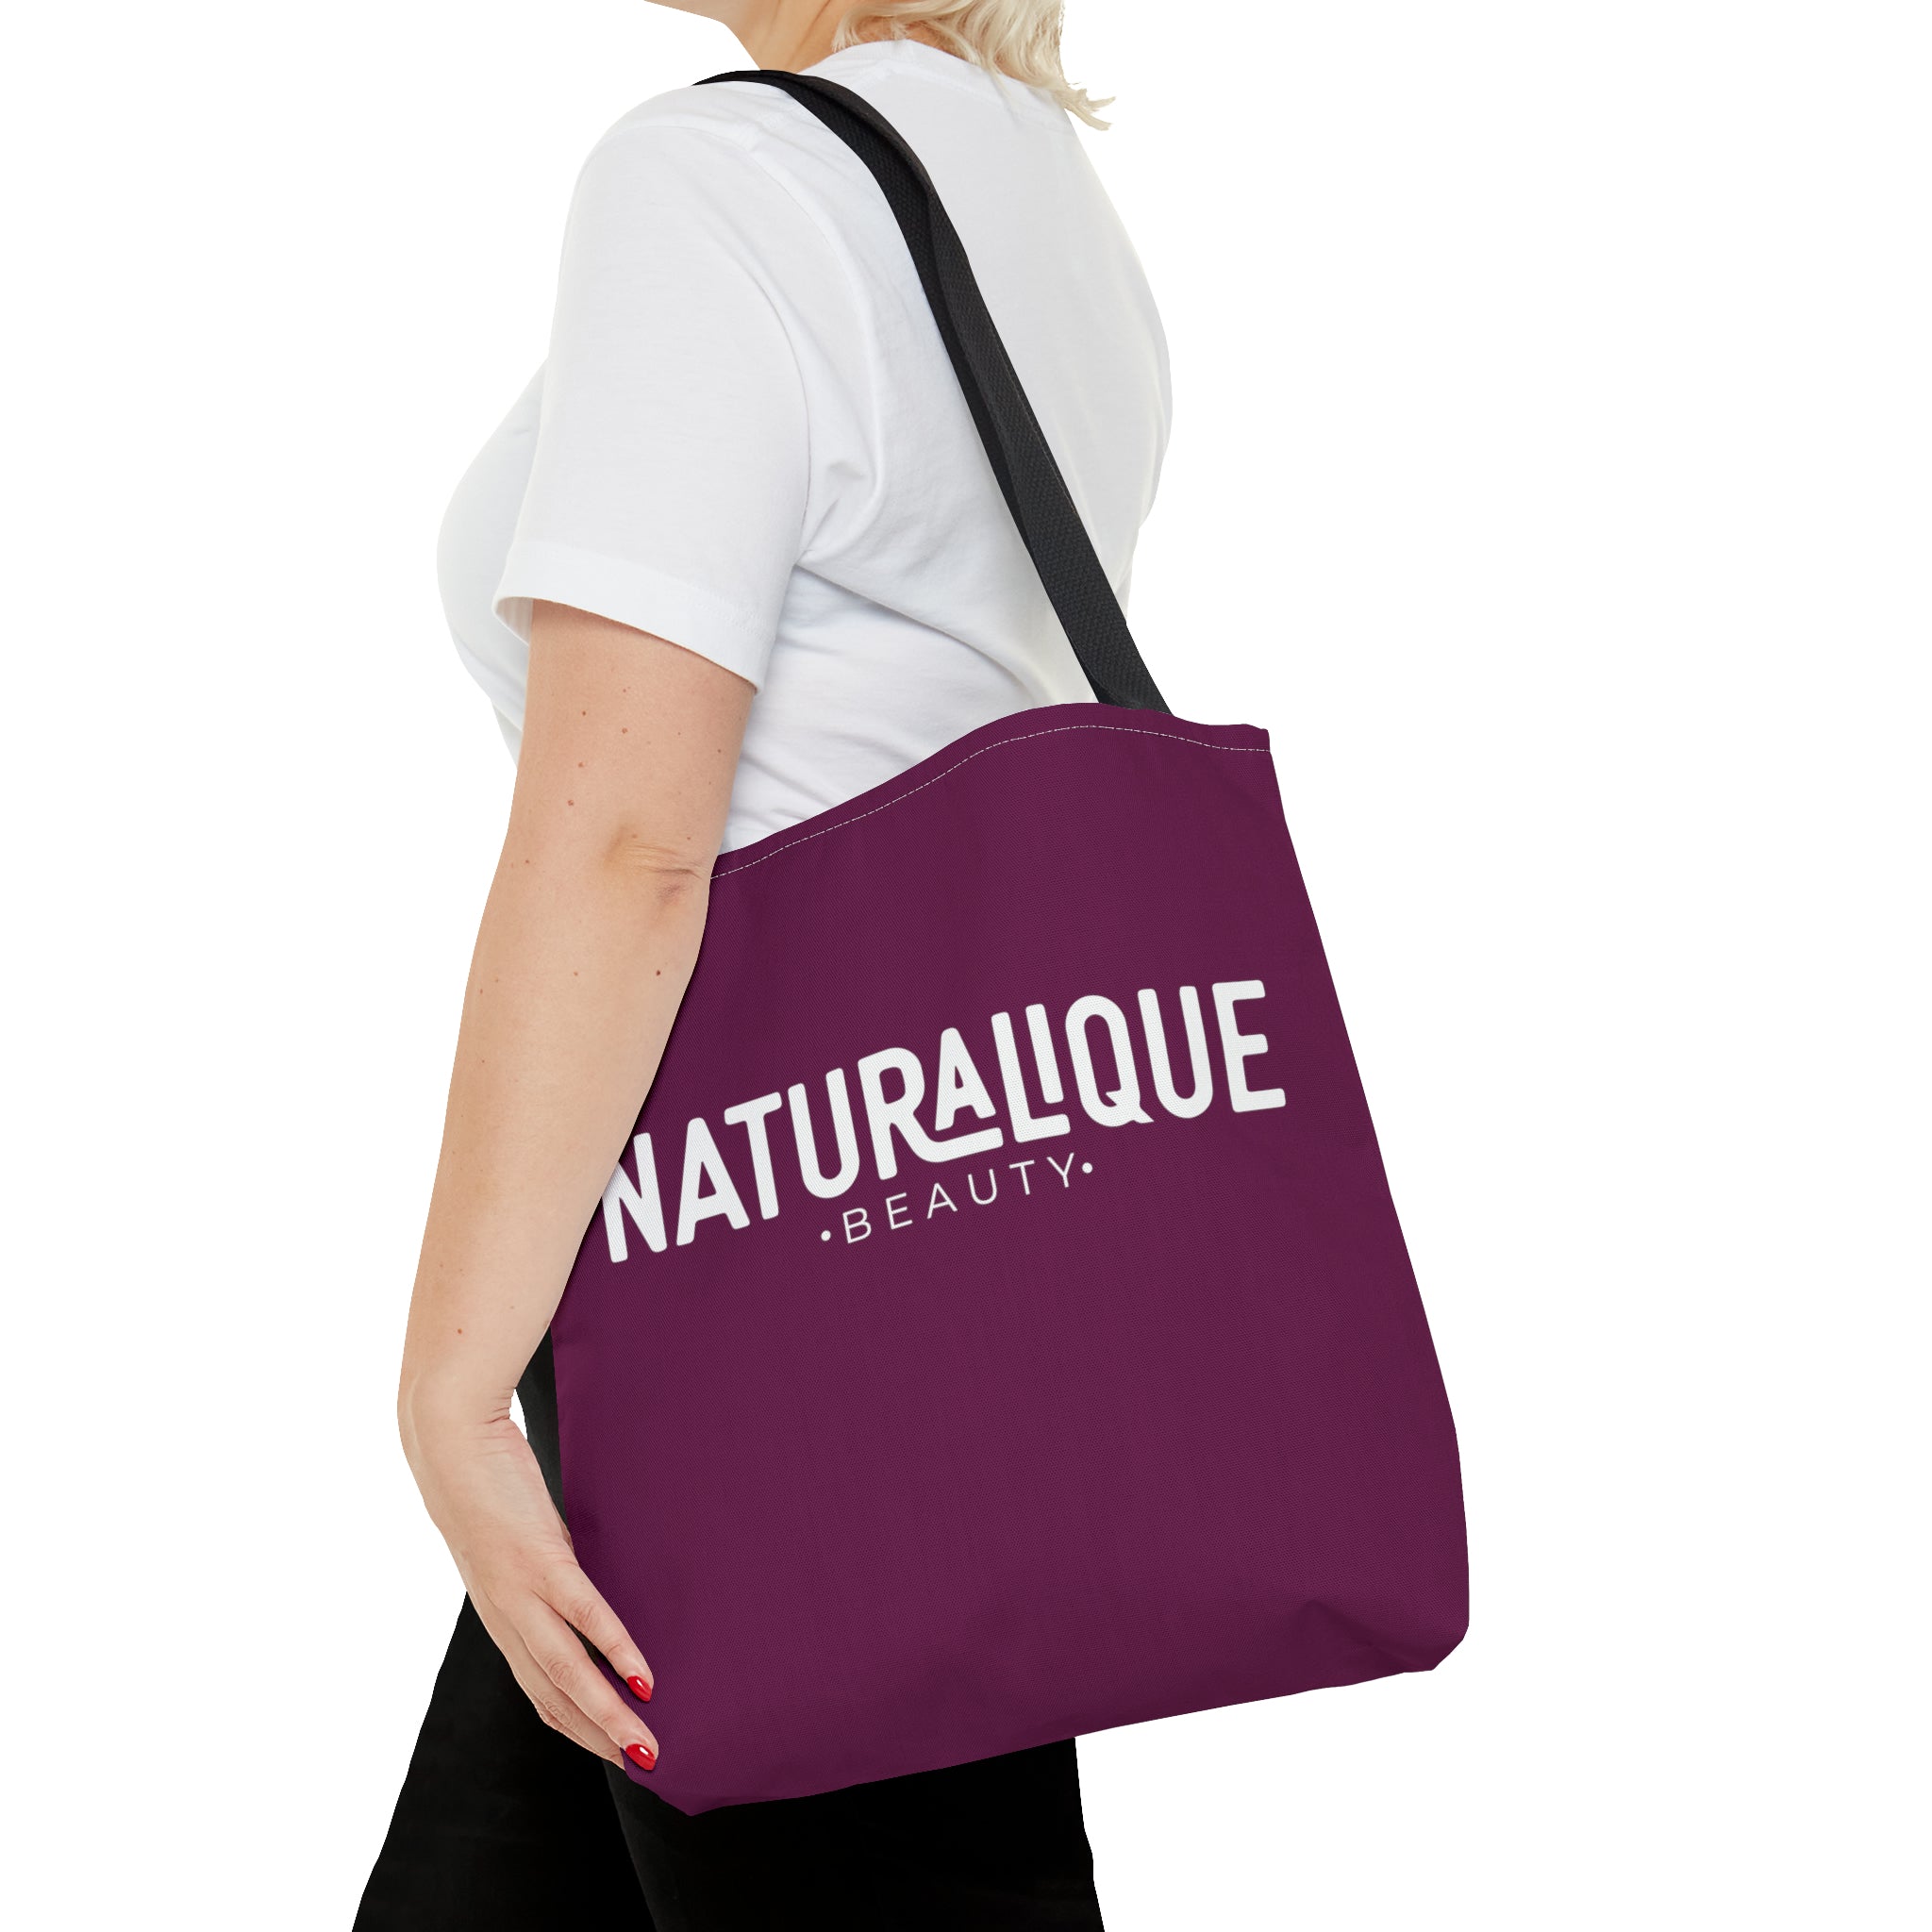 Naturalique Beauty Tote Bag - Pansy